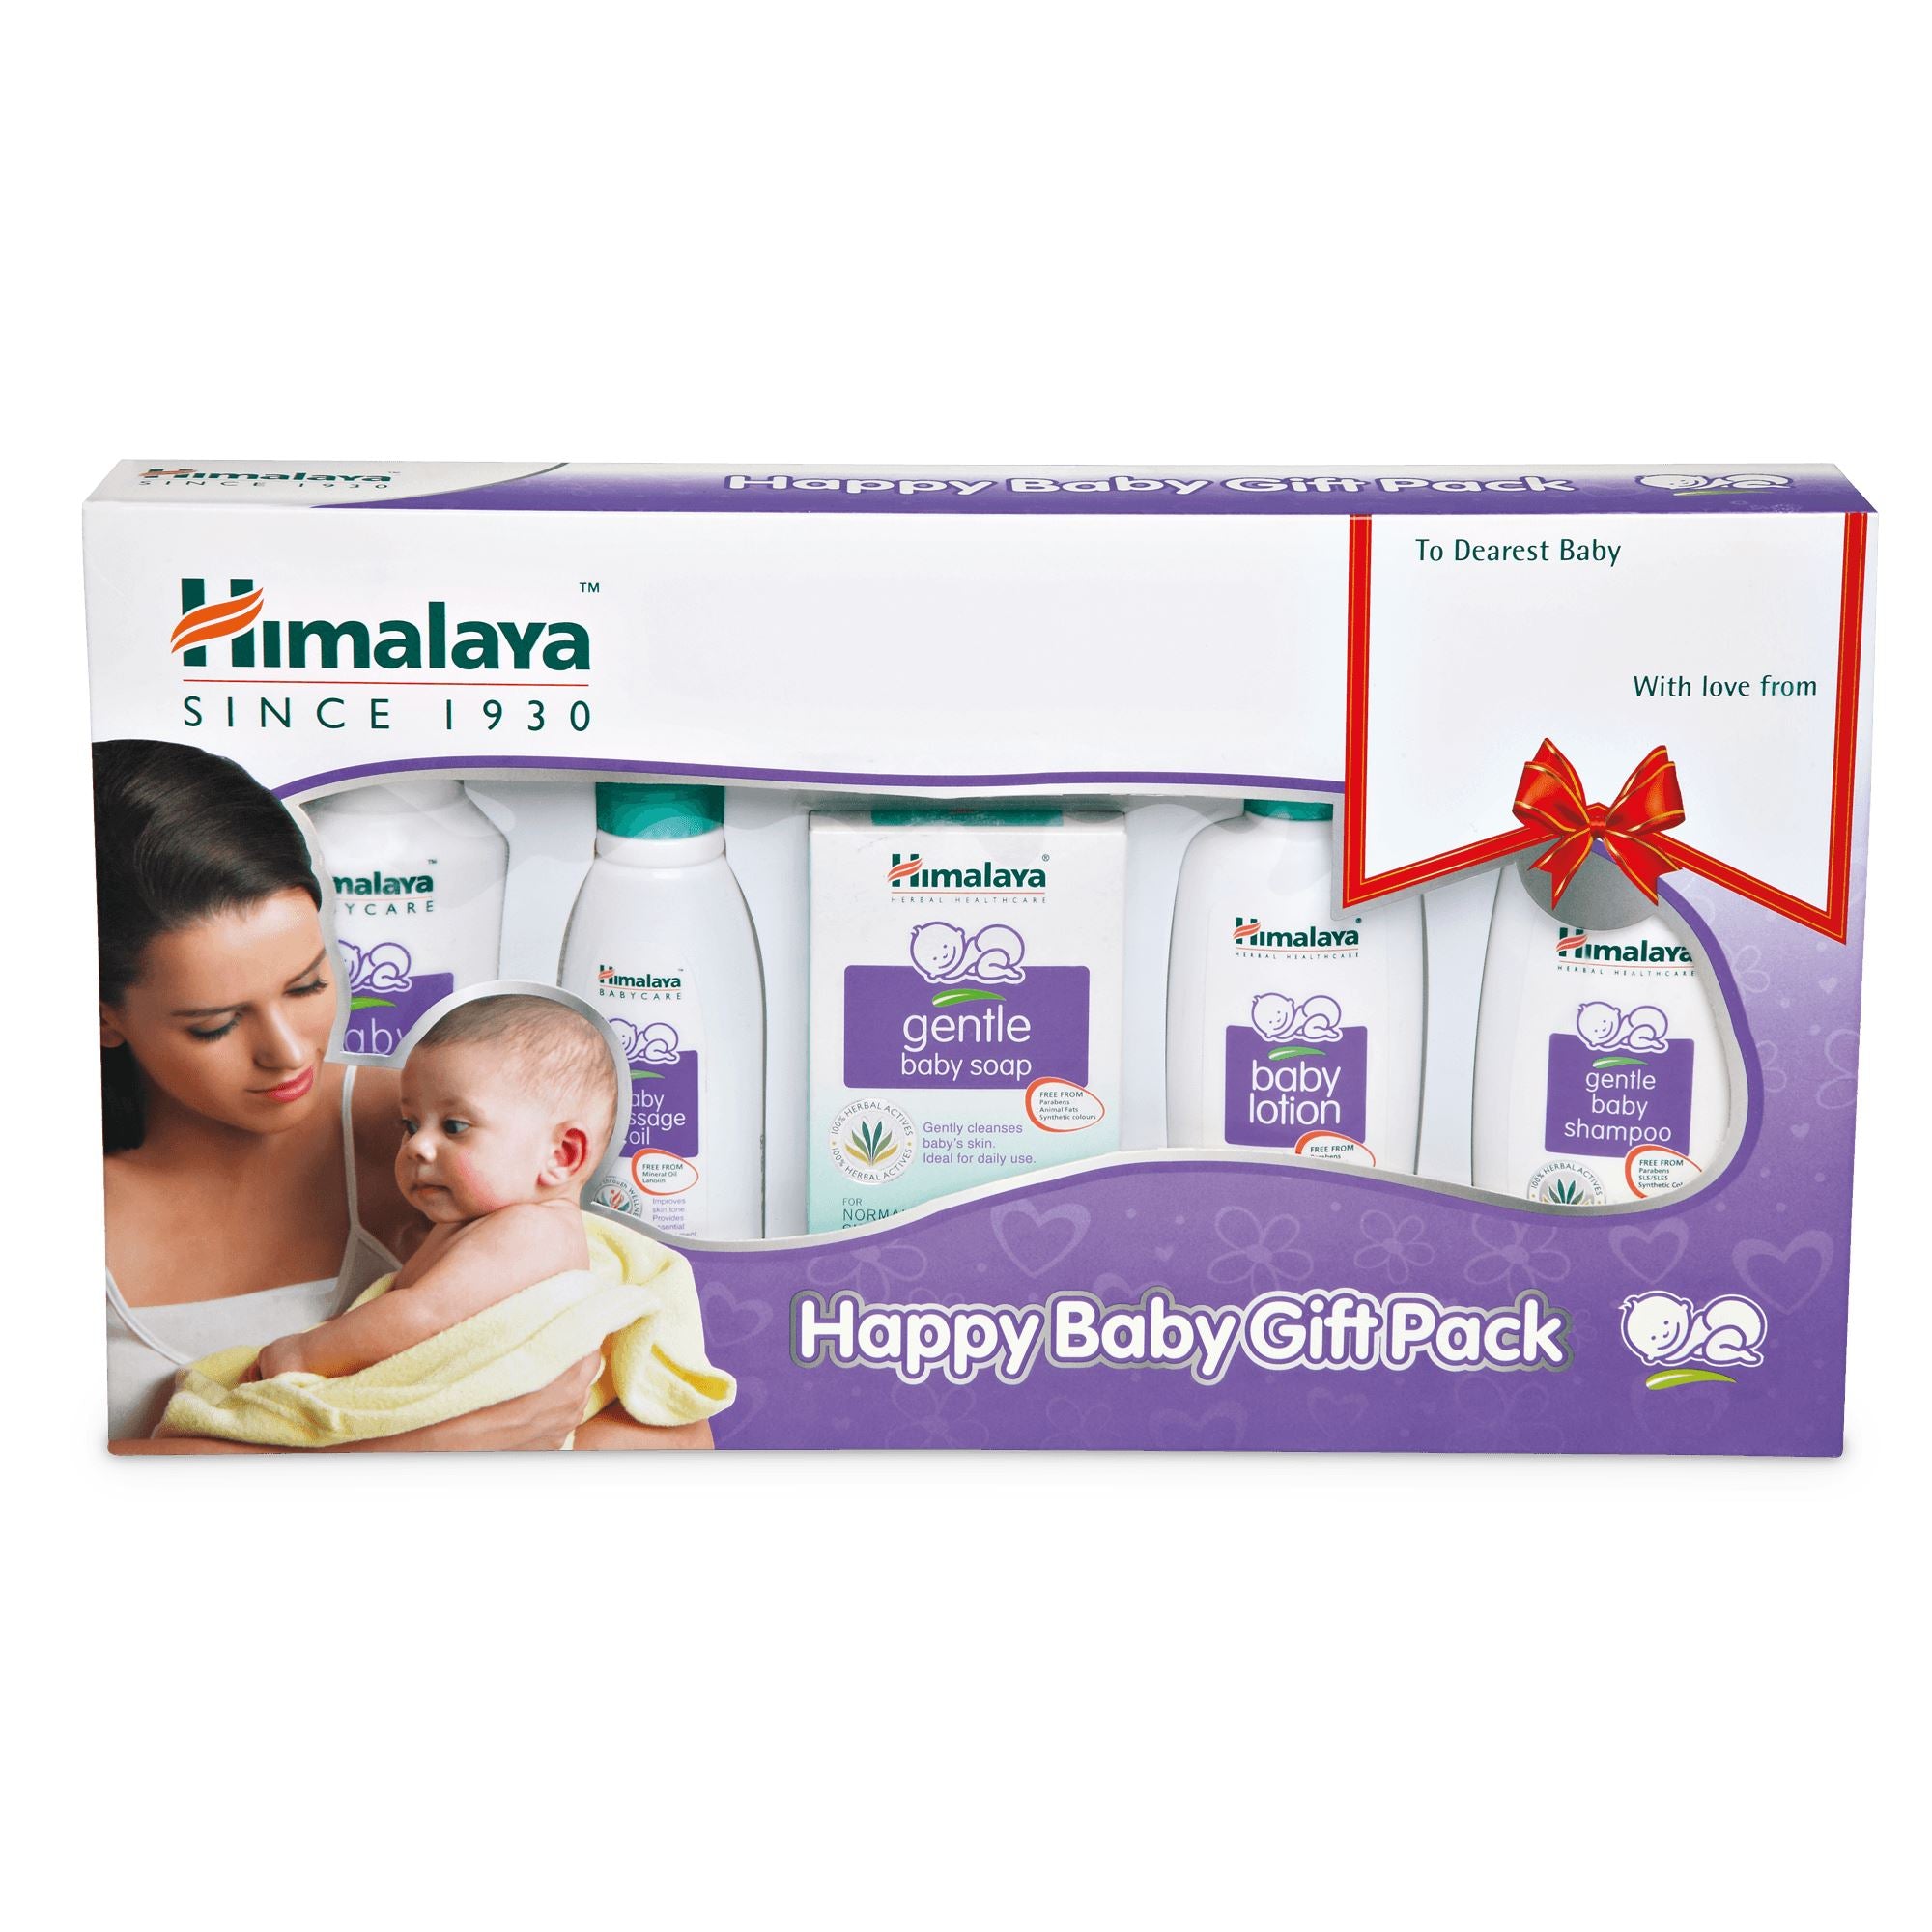 Himalaya Baby Gift Pack 5 in 1 - Shampoo, cream, rash cream, soap, and lotion